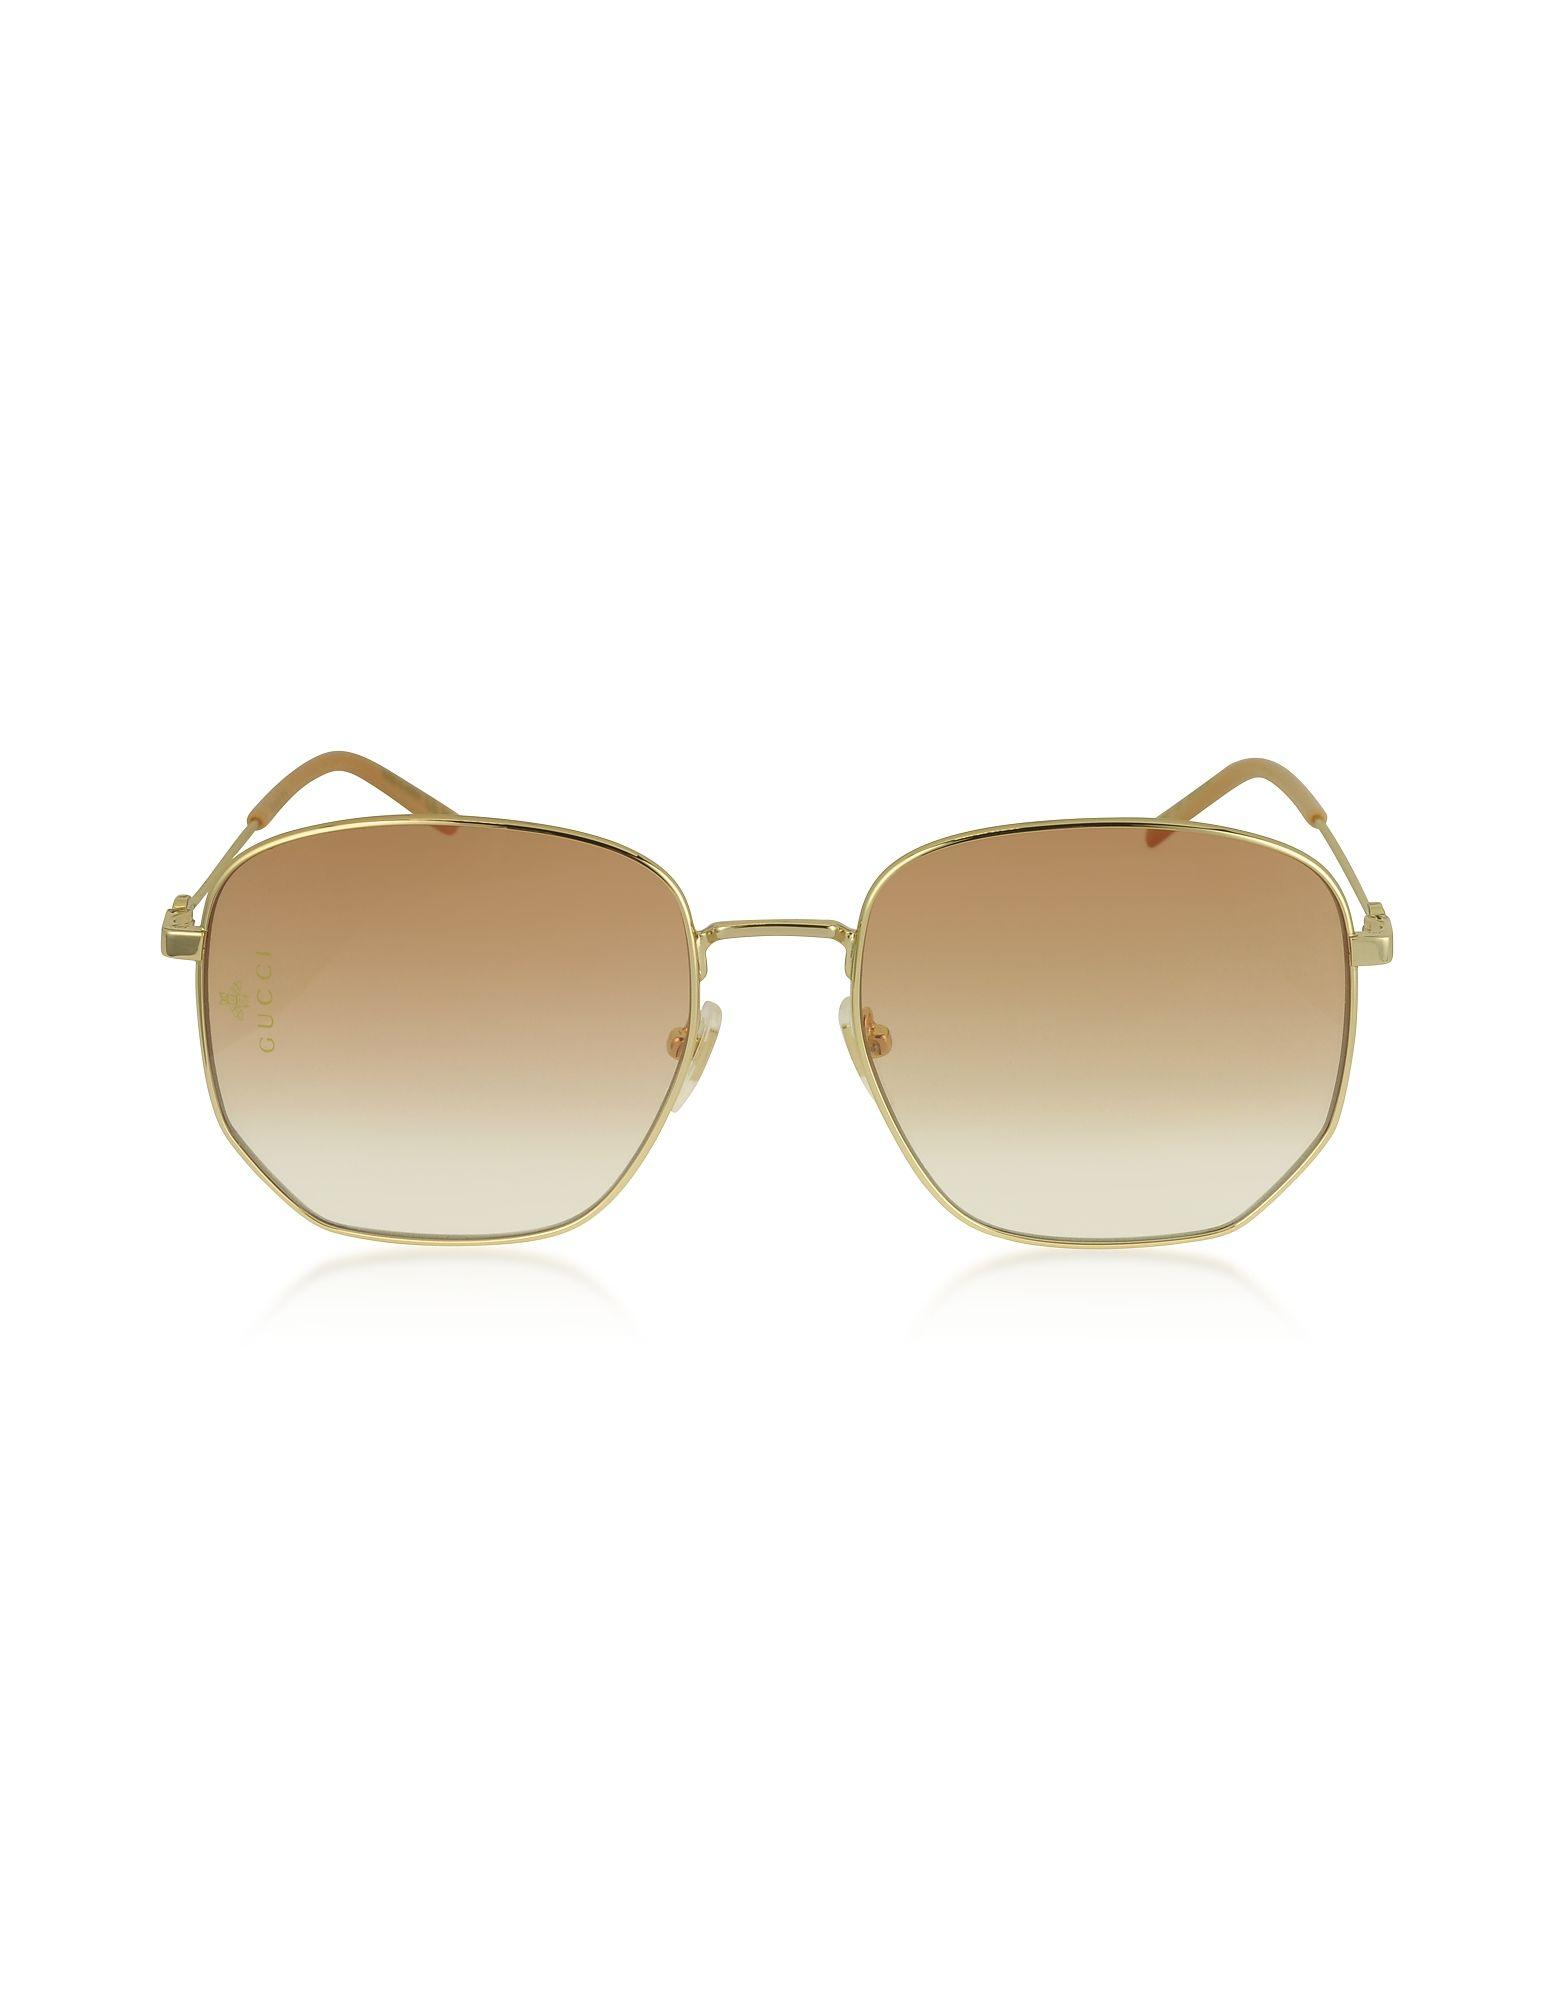 Gucci Gold Metal Sunglasses in Metallic for Men - Lyst